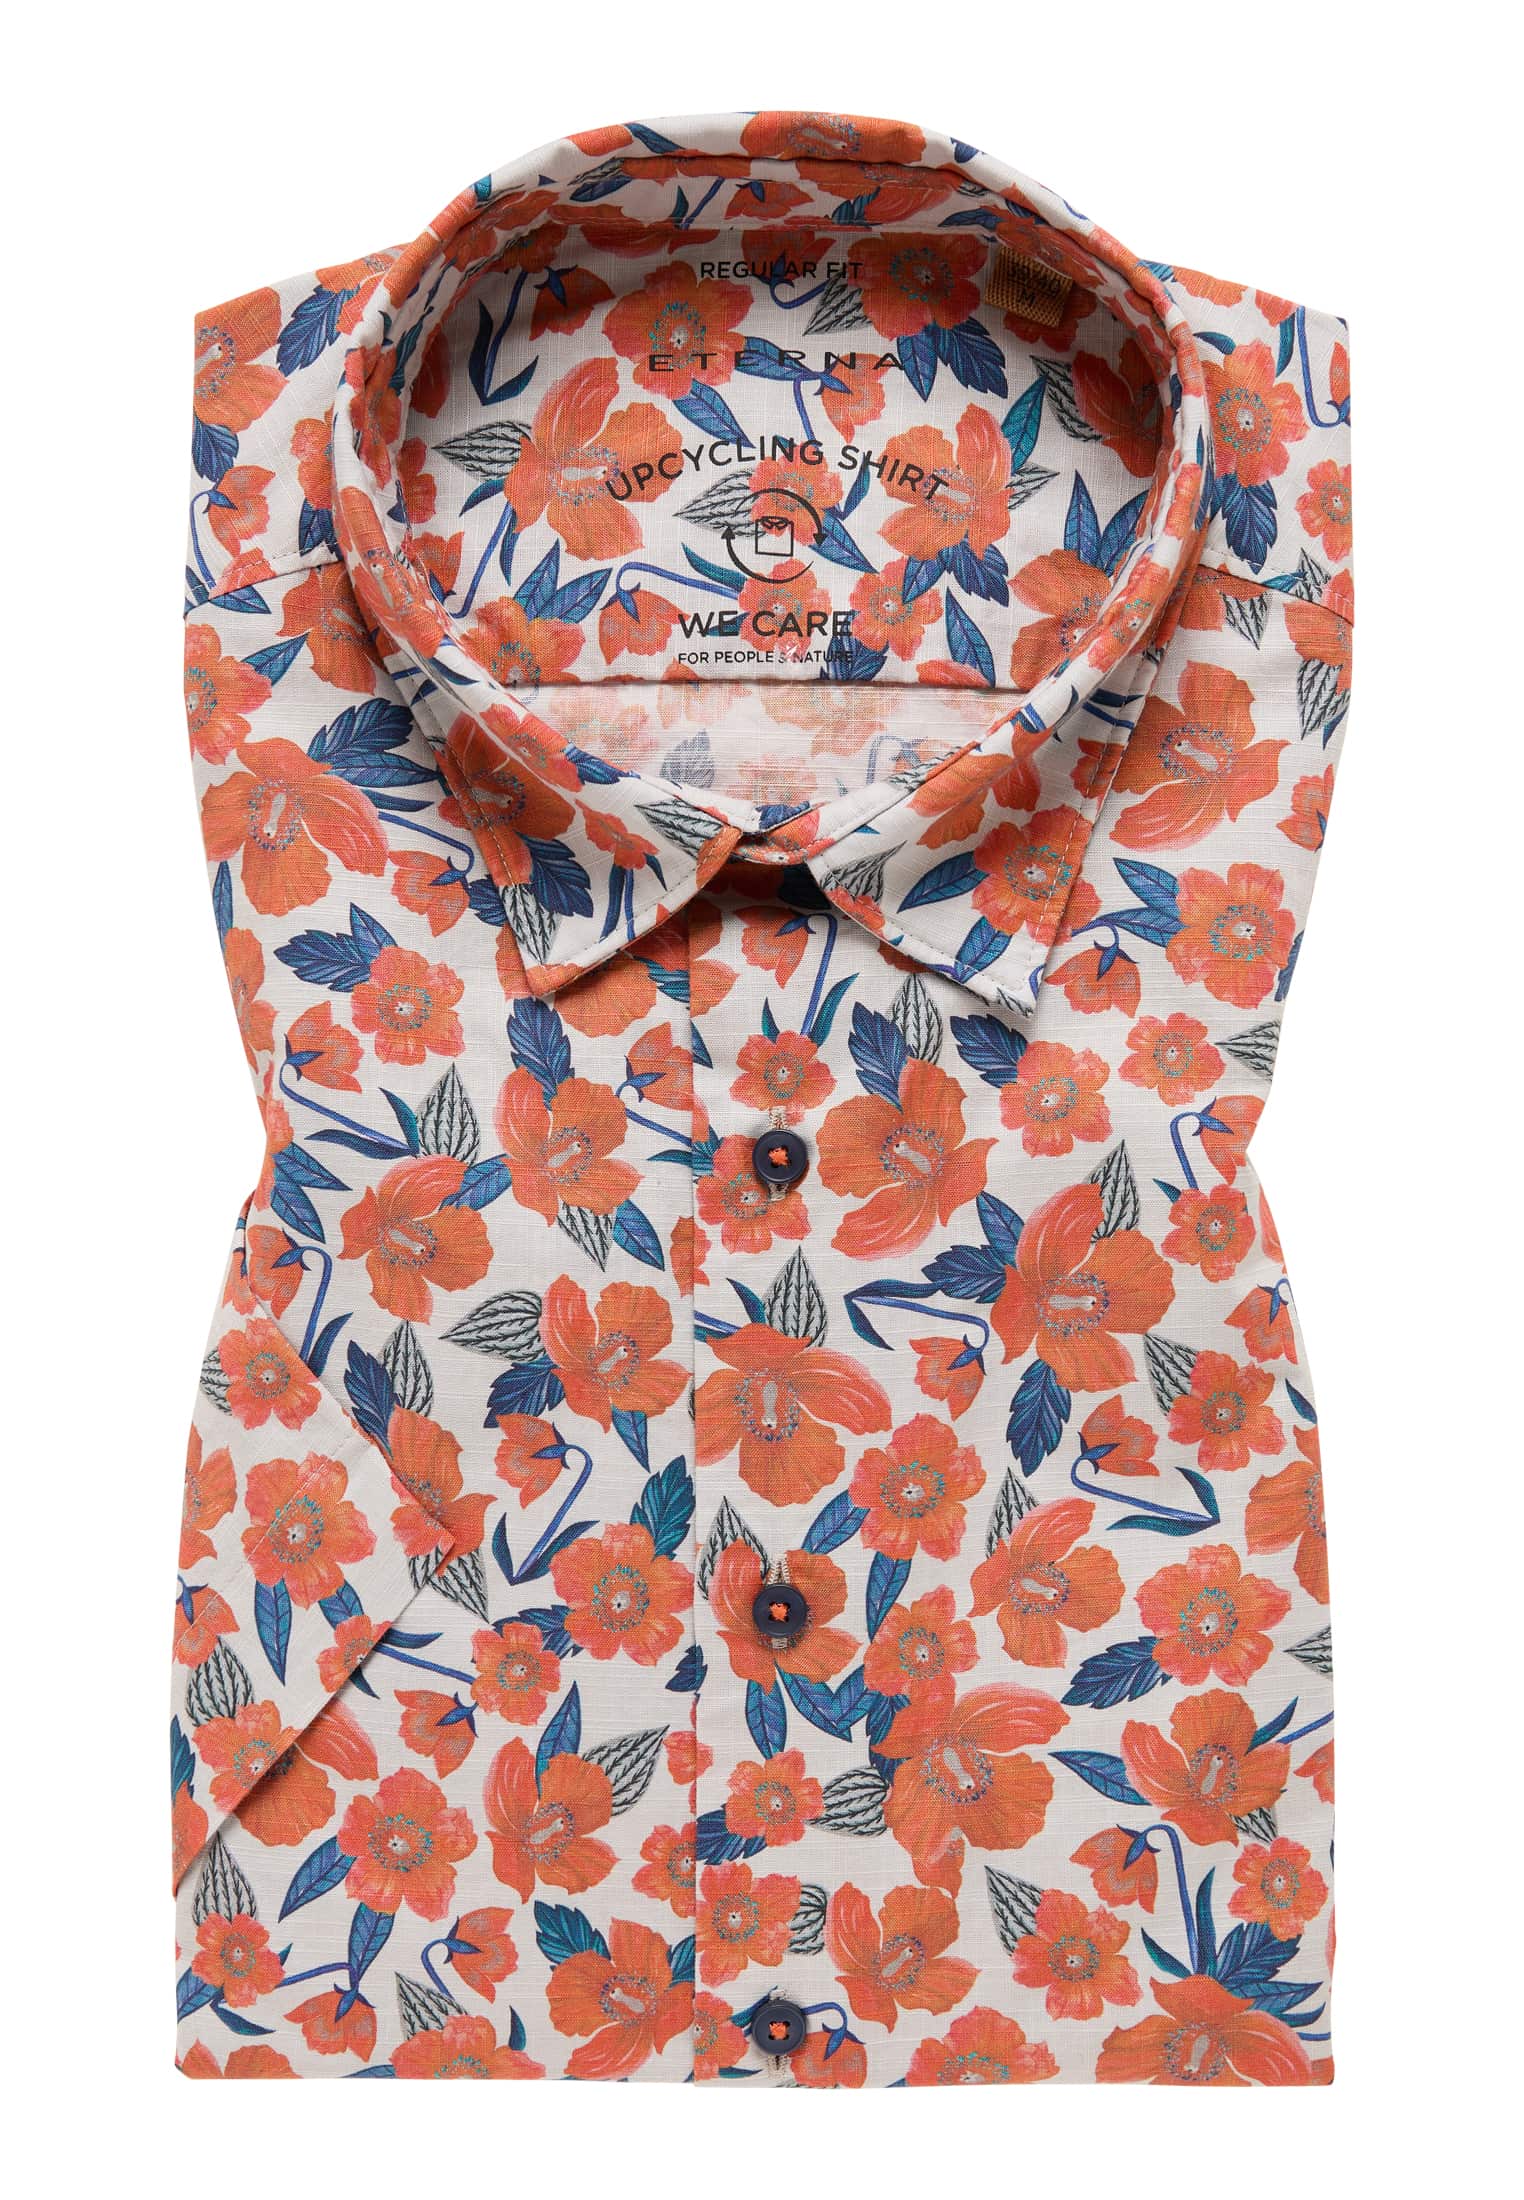 FIT sleeve REGULAR orange | S orange in | Shirt printed | | short 1SH04089-08-01-S-1/2